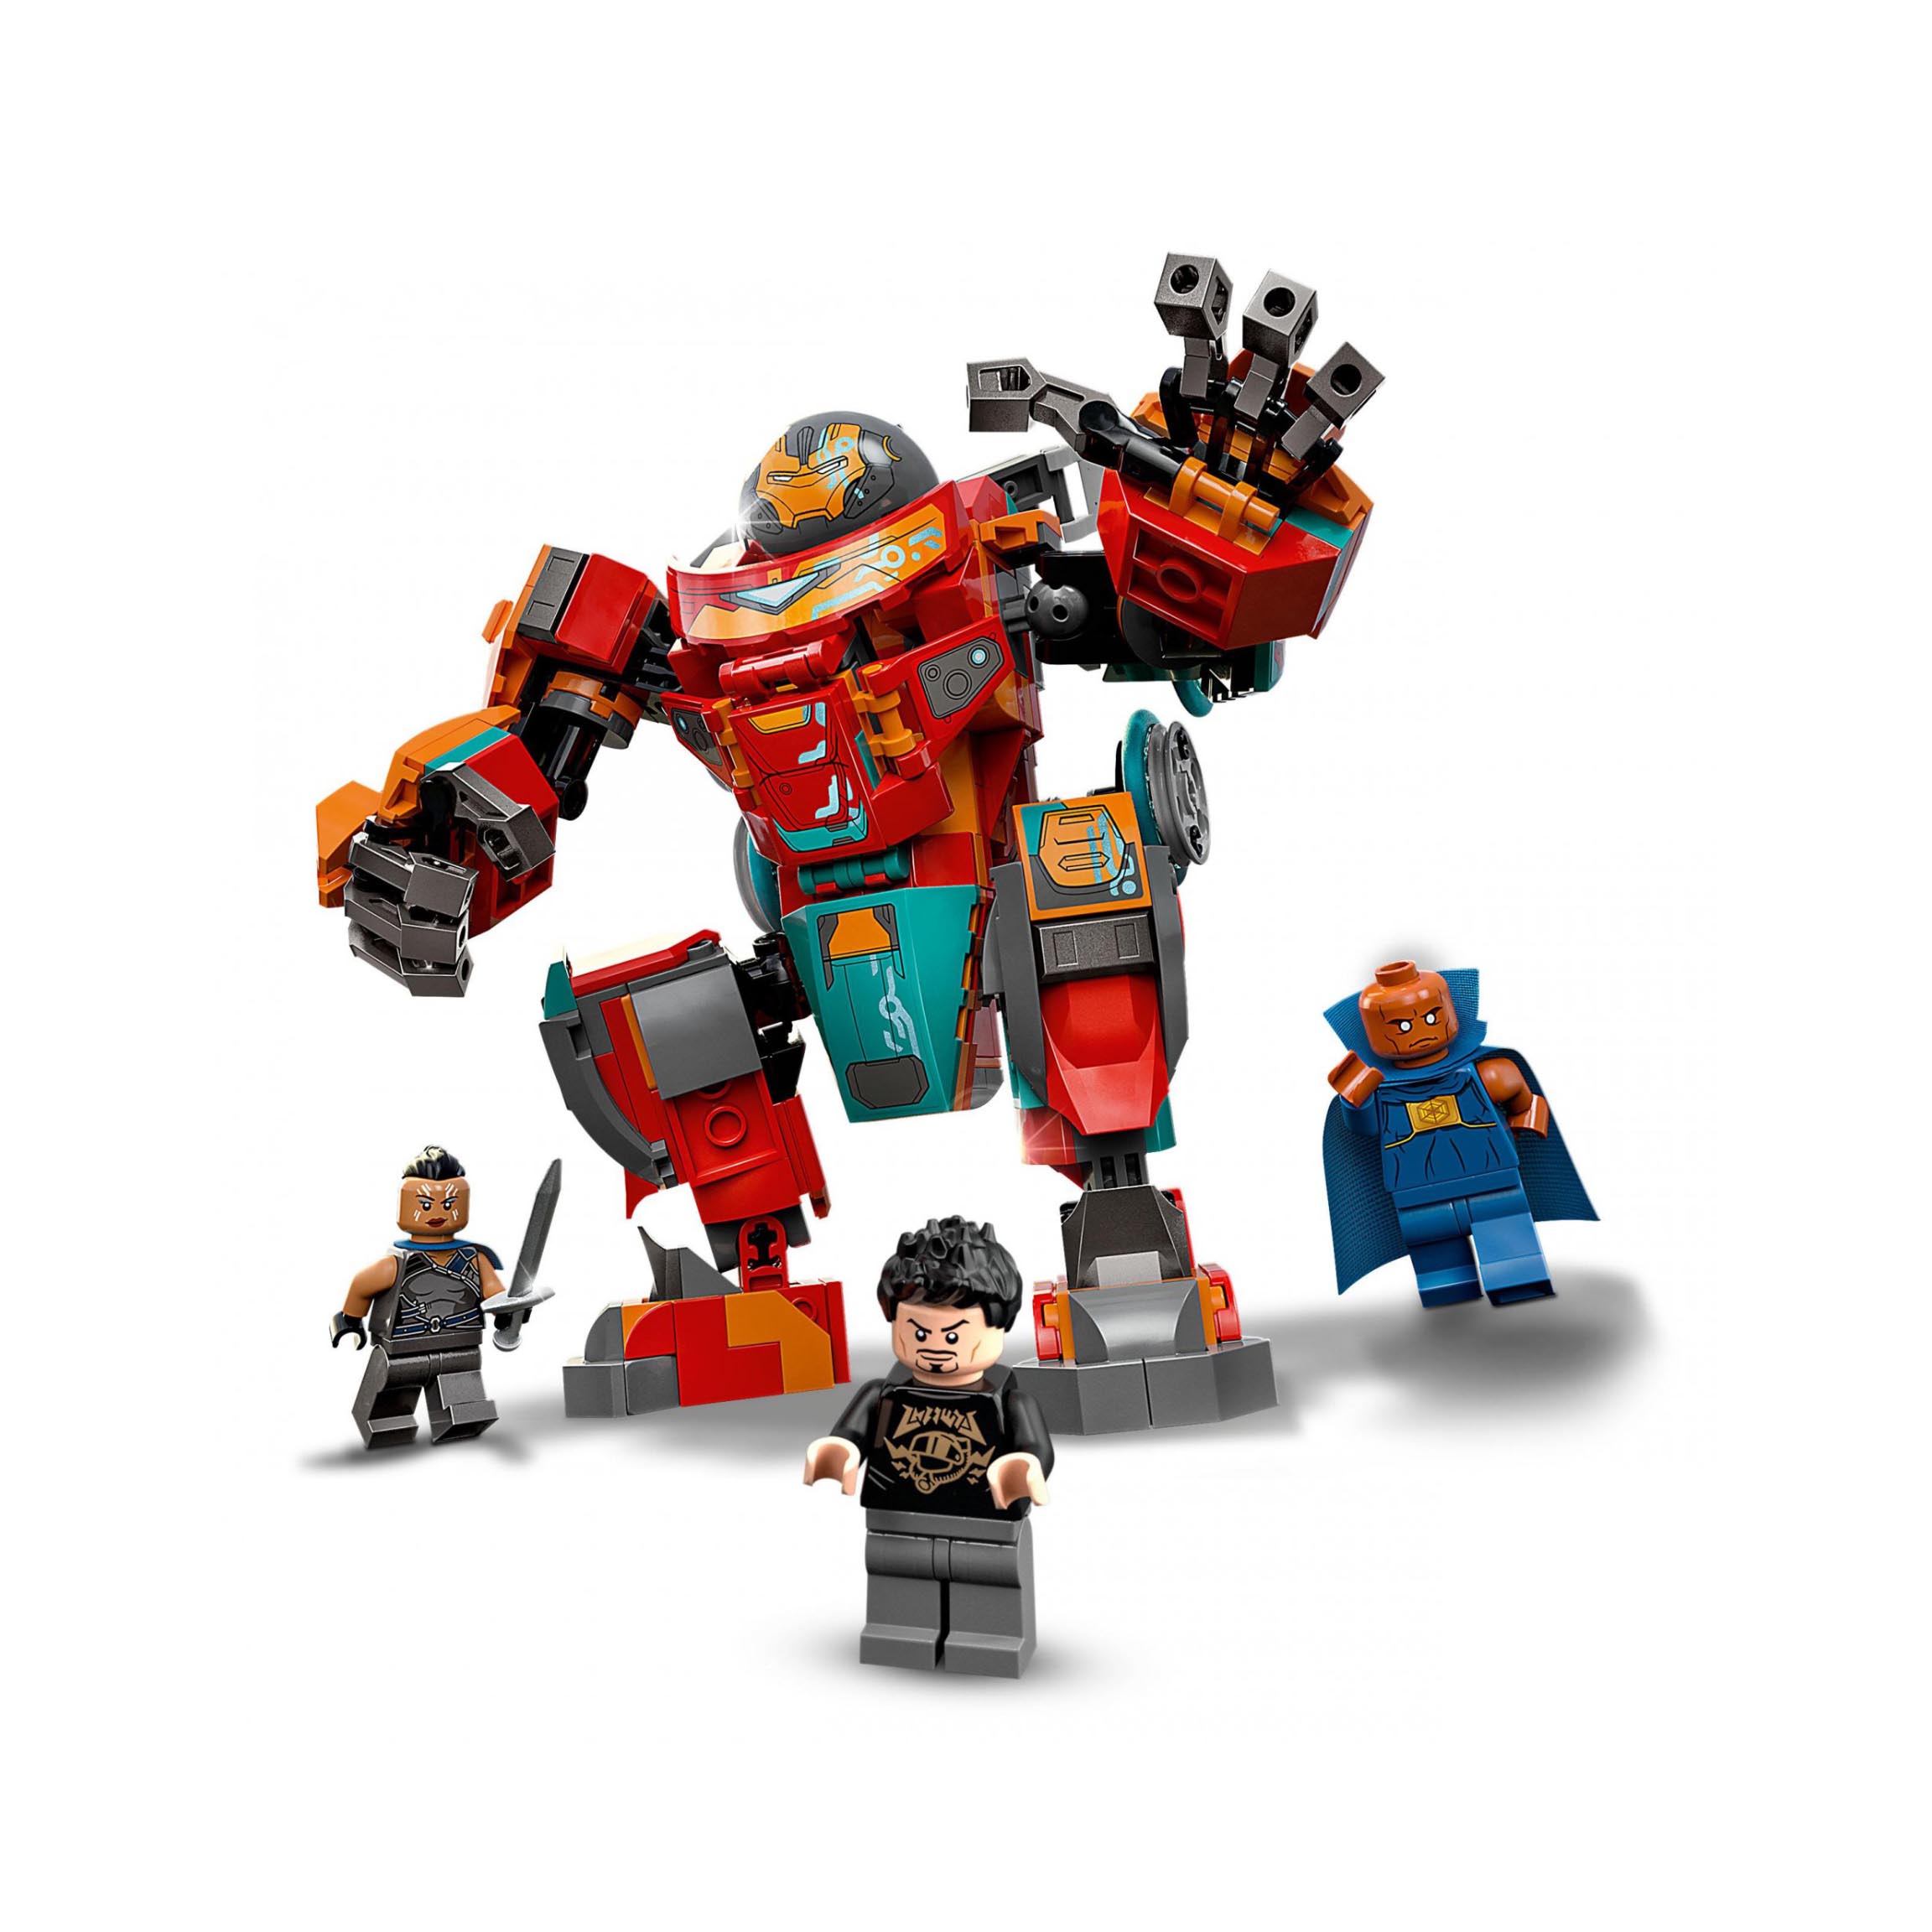 LEGO Marvel Iron Man Sakaariano di Tony Stark, da Action Figure ad Autovettura, 76194, , large